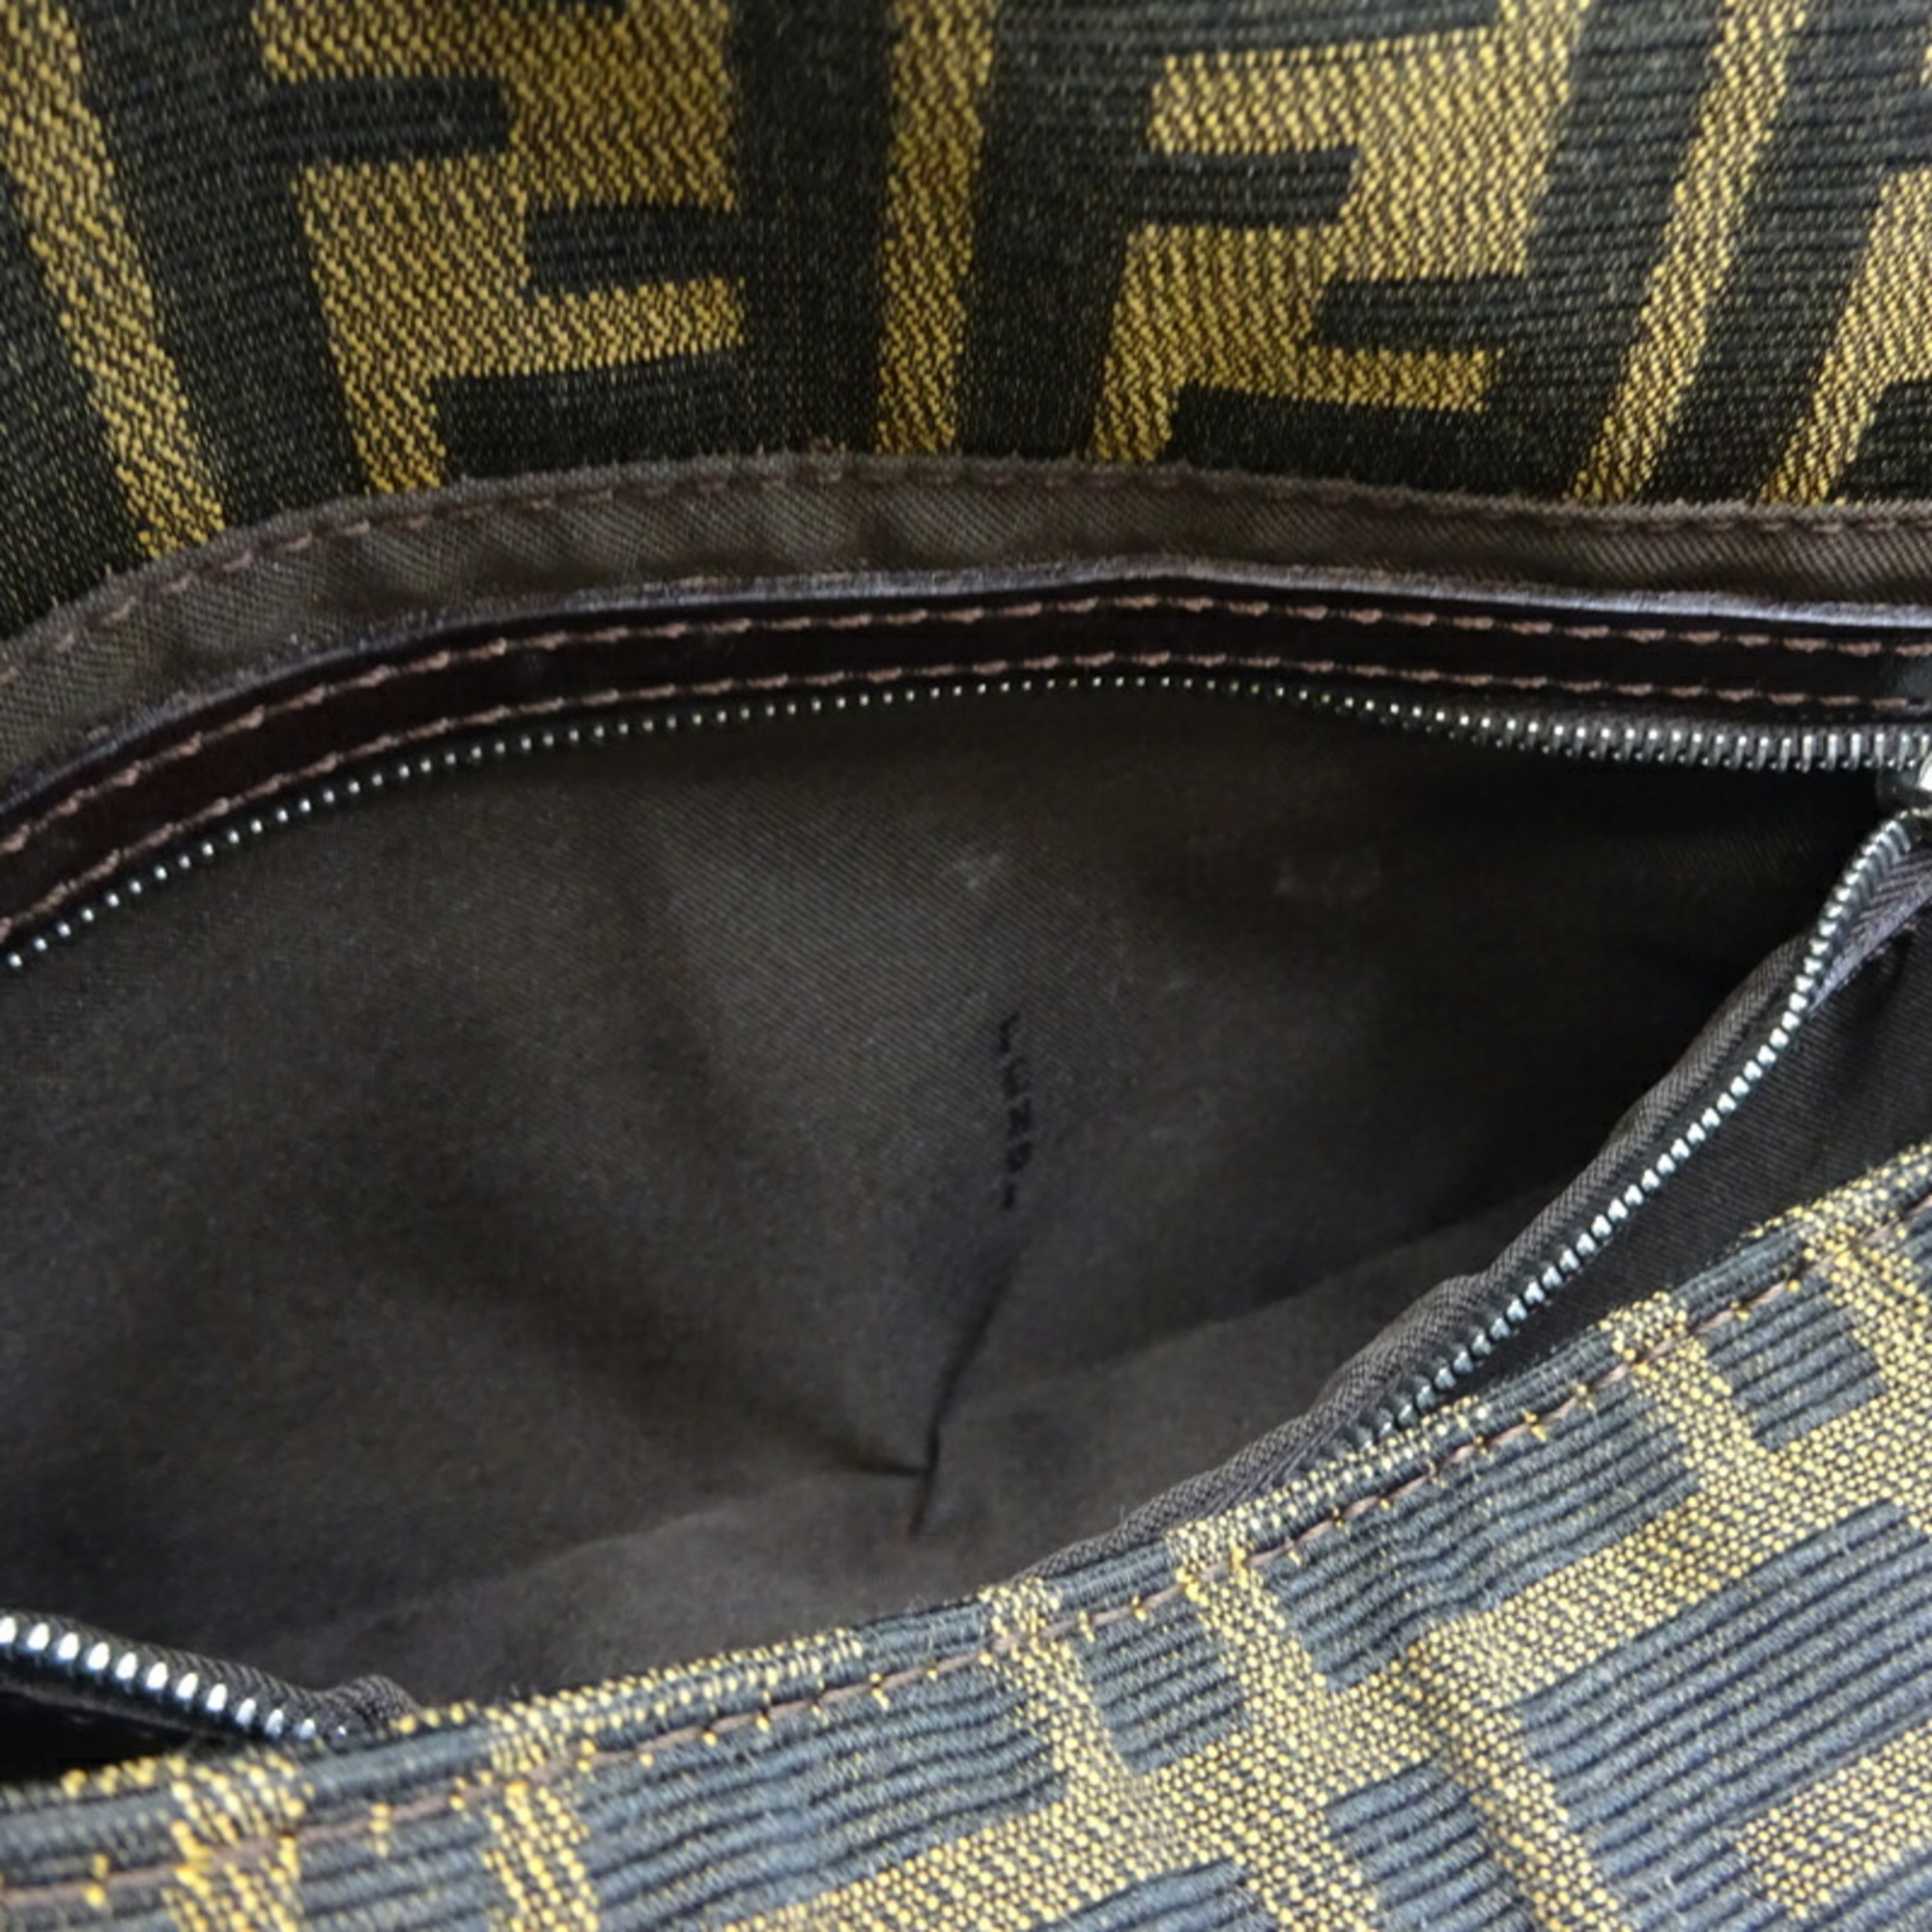 Fendi Mamma Bucket Women's Handbag 2321.26424 Cotton Brown